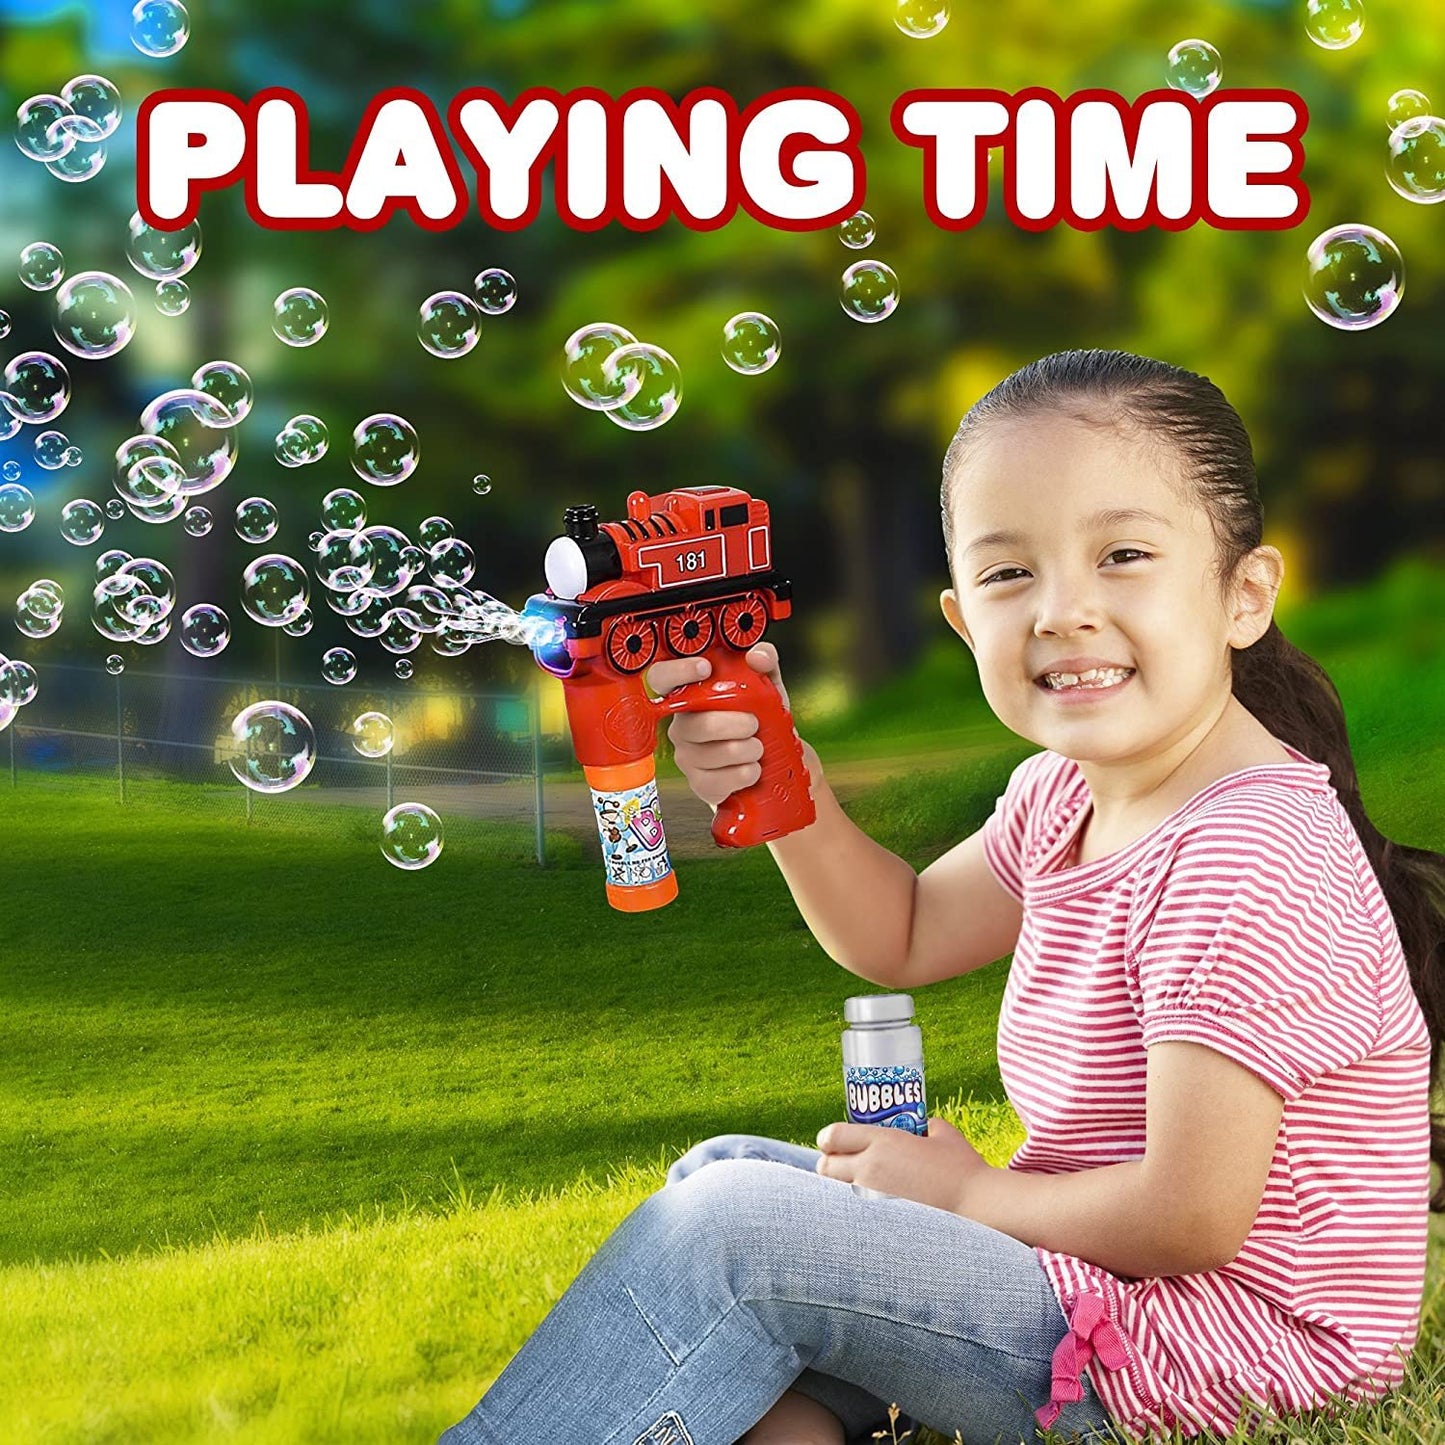 ArtCreativity 4 oz Bubble Solution Refill for Bubble Guns - 24 Pack 4oz Each - 24 Bottles Non-Toxic Bubble Fluid for Kids - Liquid for Bubble Machine, Bubble Blowing Gun, and Toy Wands